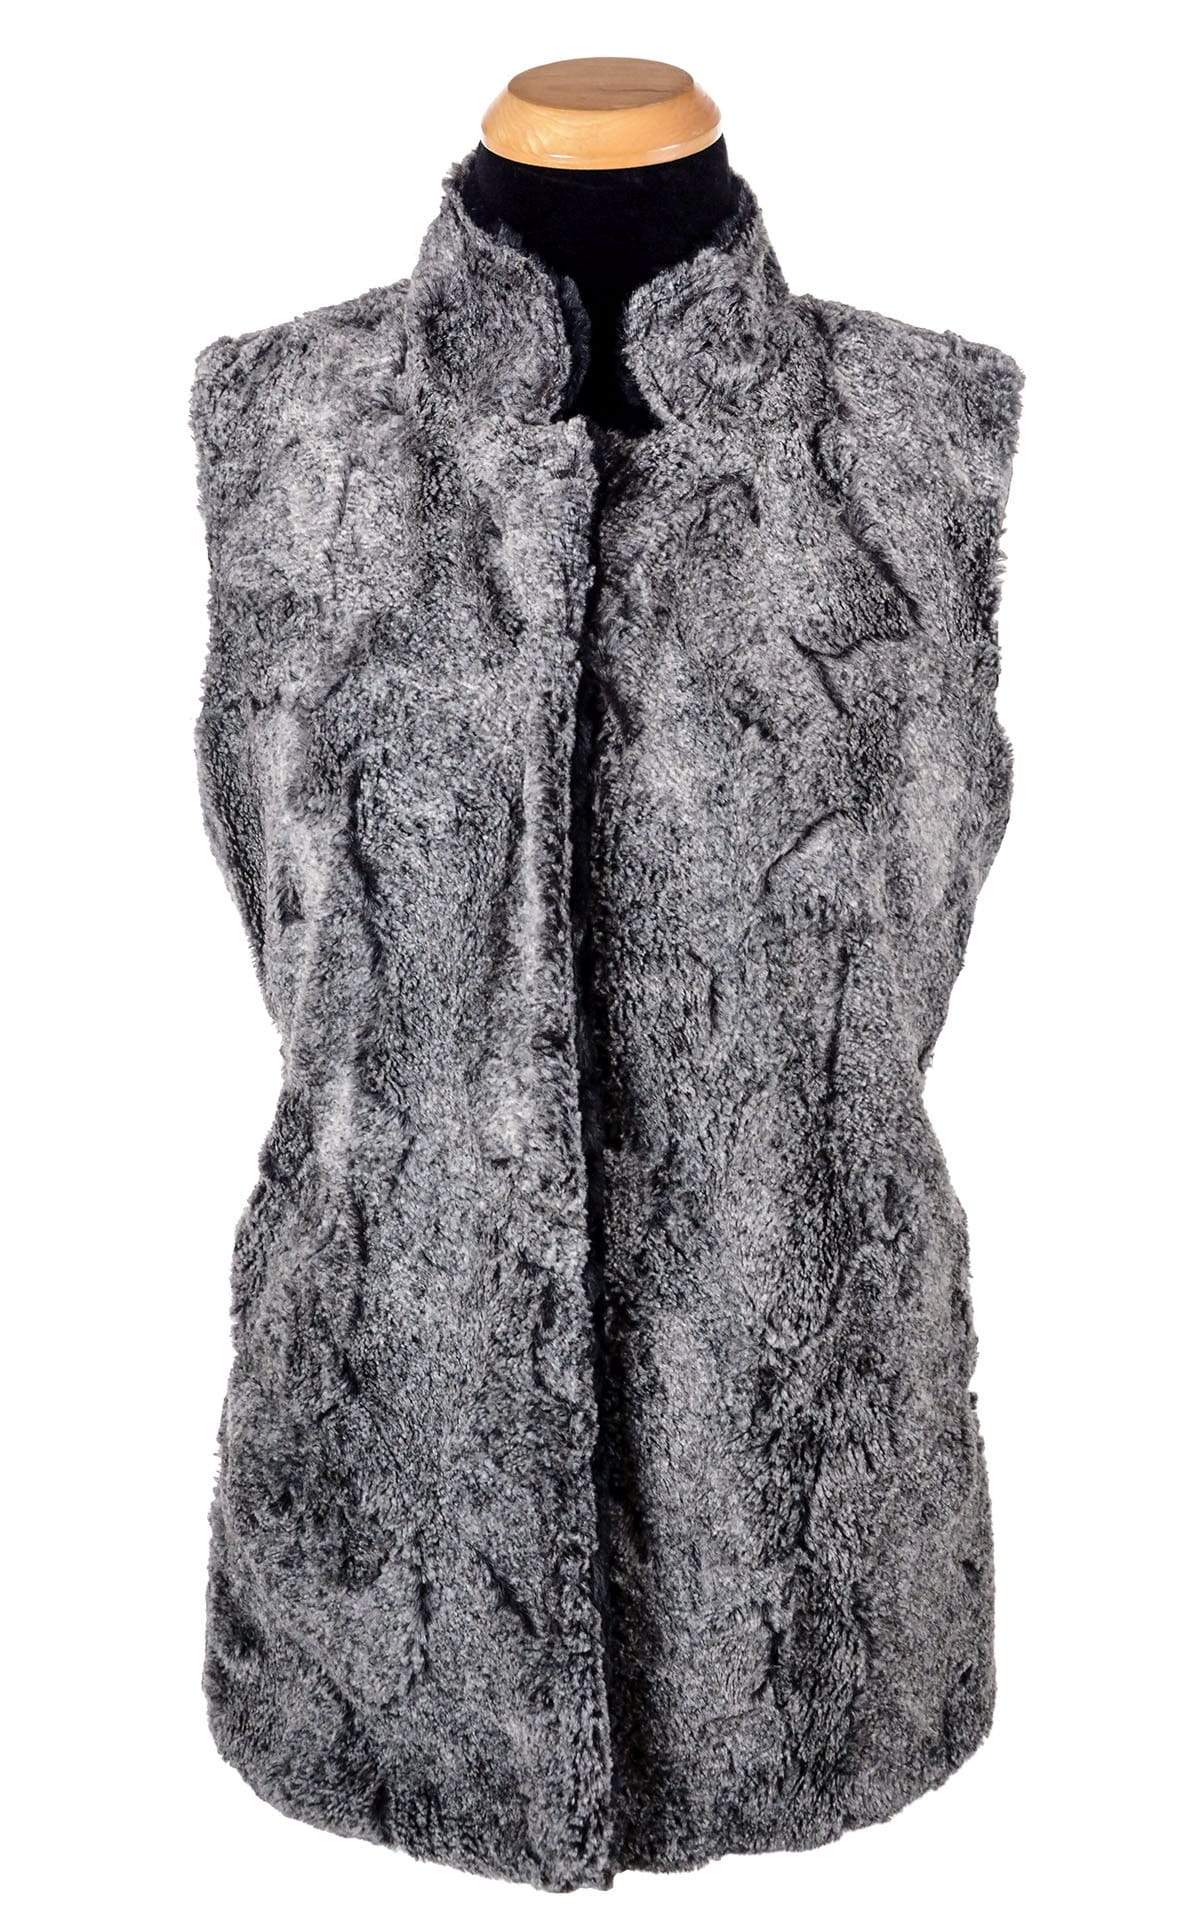 Mandarin Vest Short, Reversible less pockets - Luxury Faux Fur Nimbus with Cuddly Fur in Black